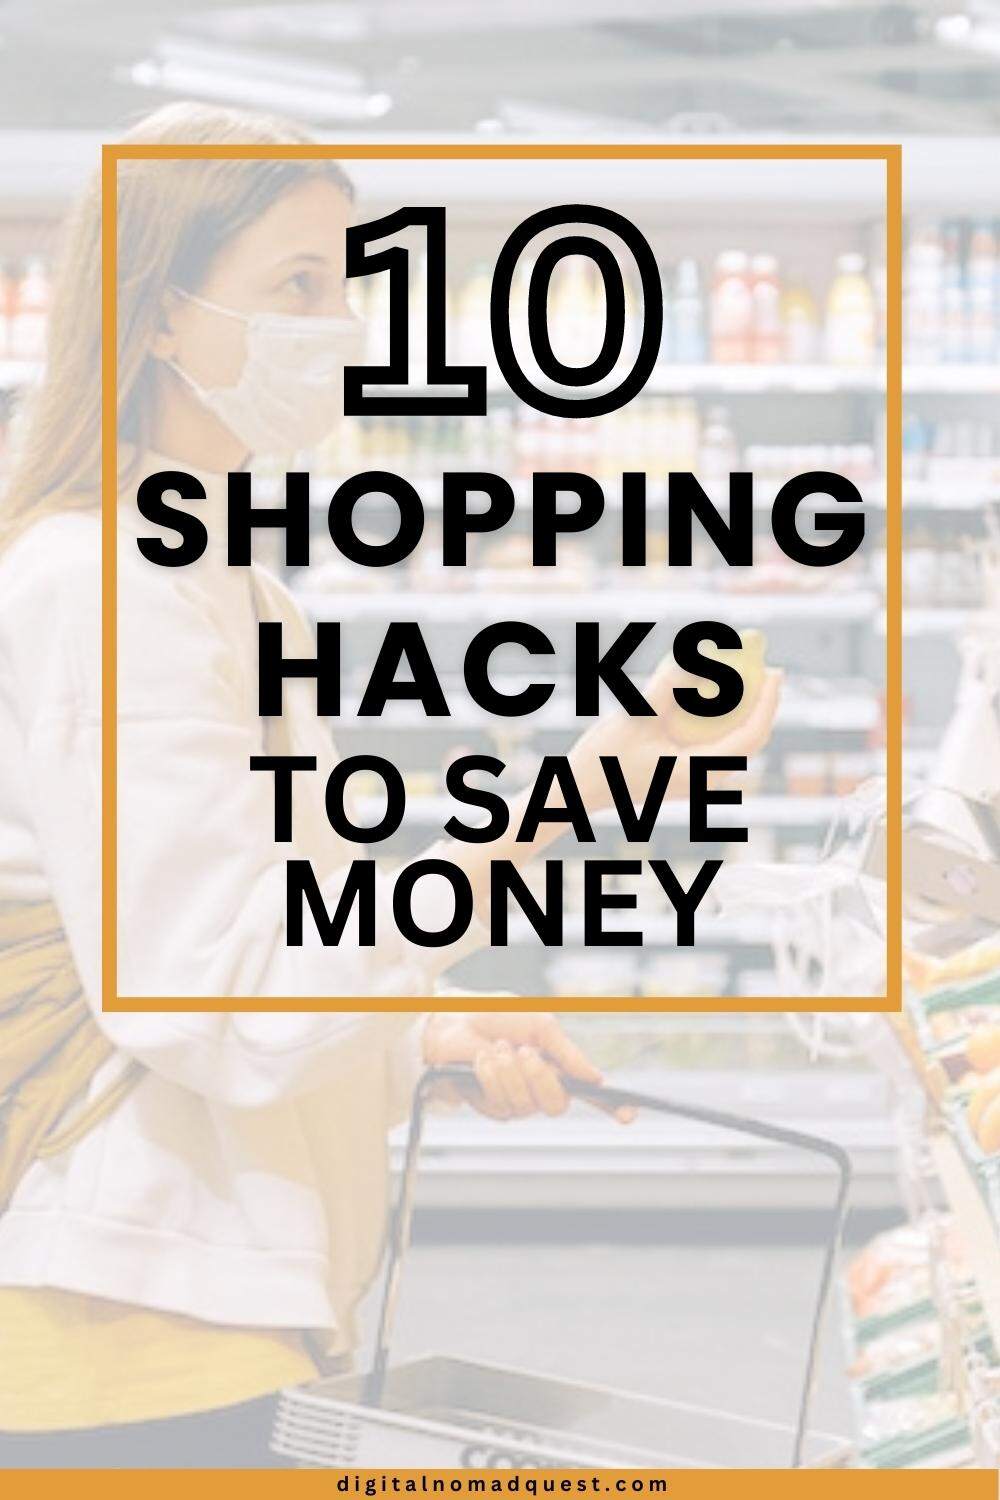 Discounted shopping hacks